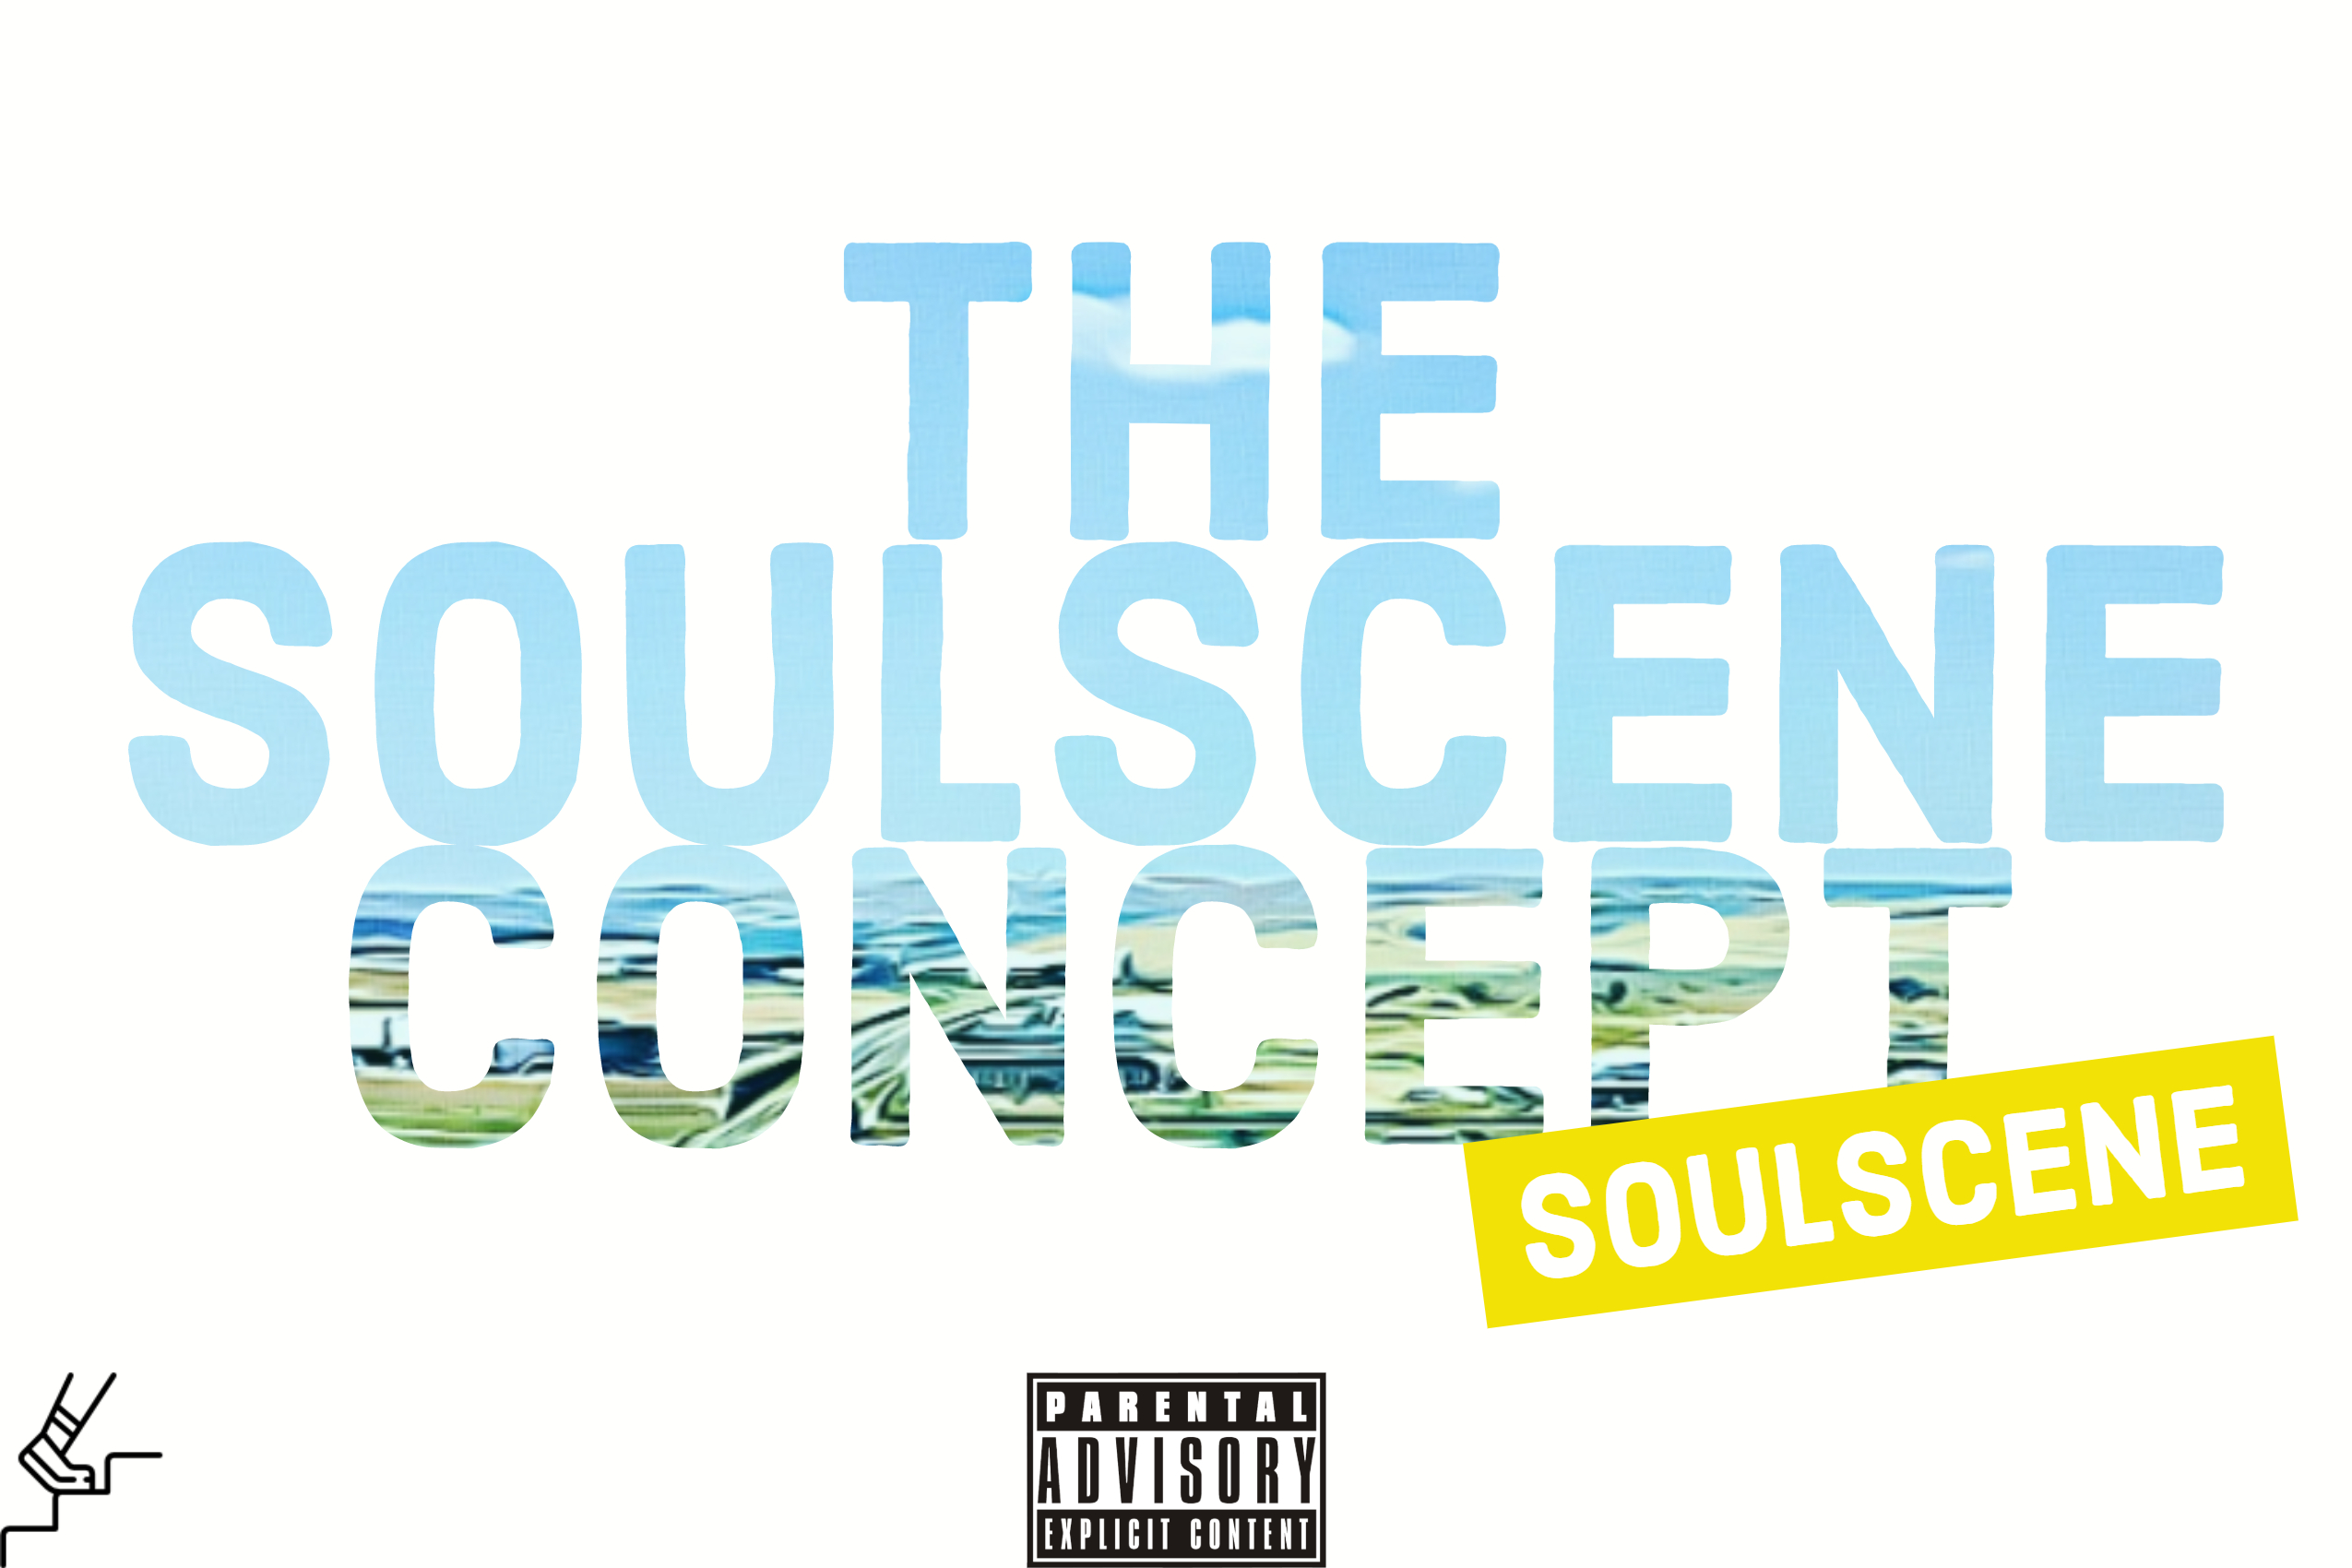 The Soulscene Concept